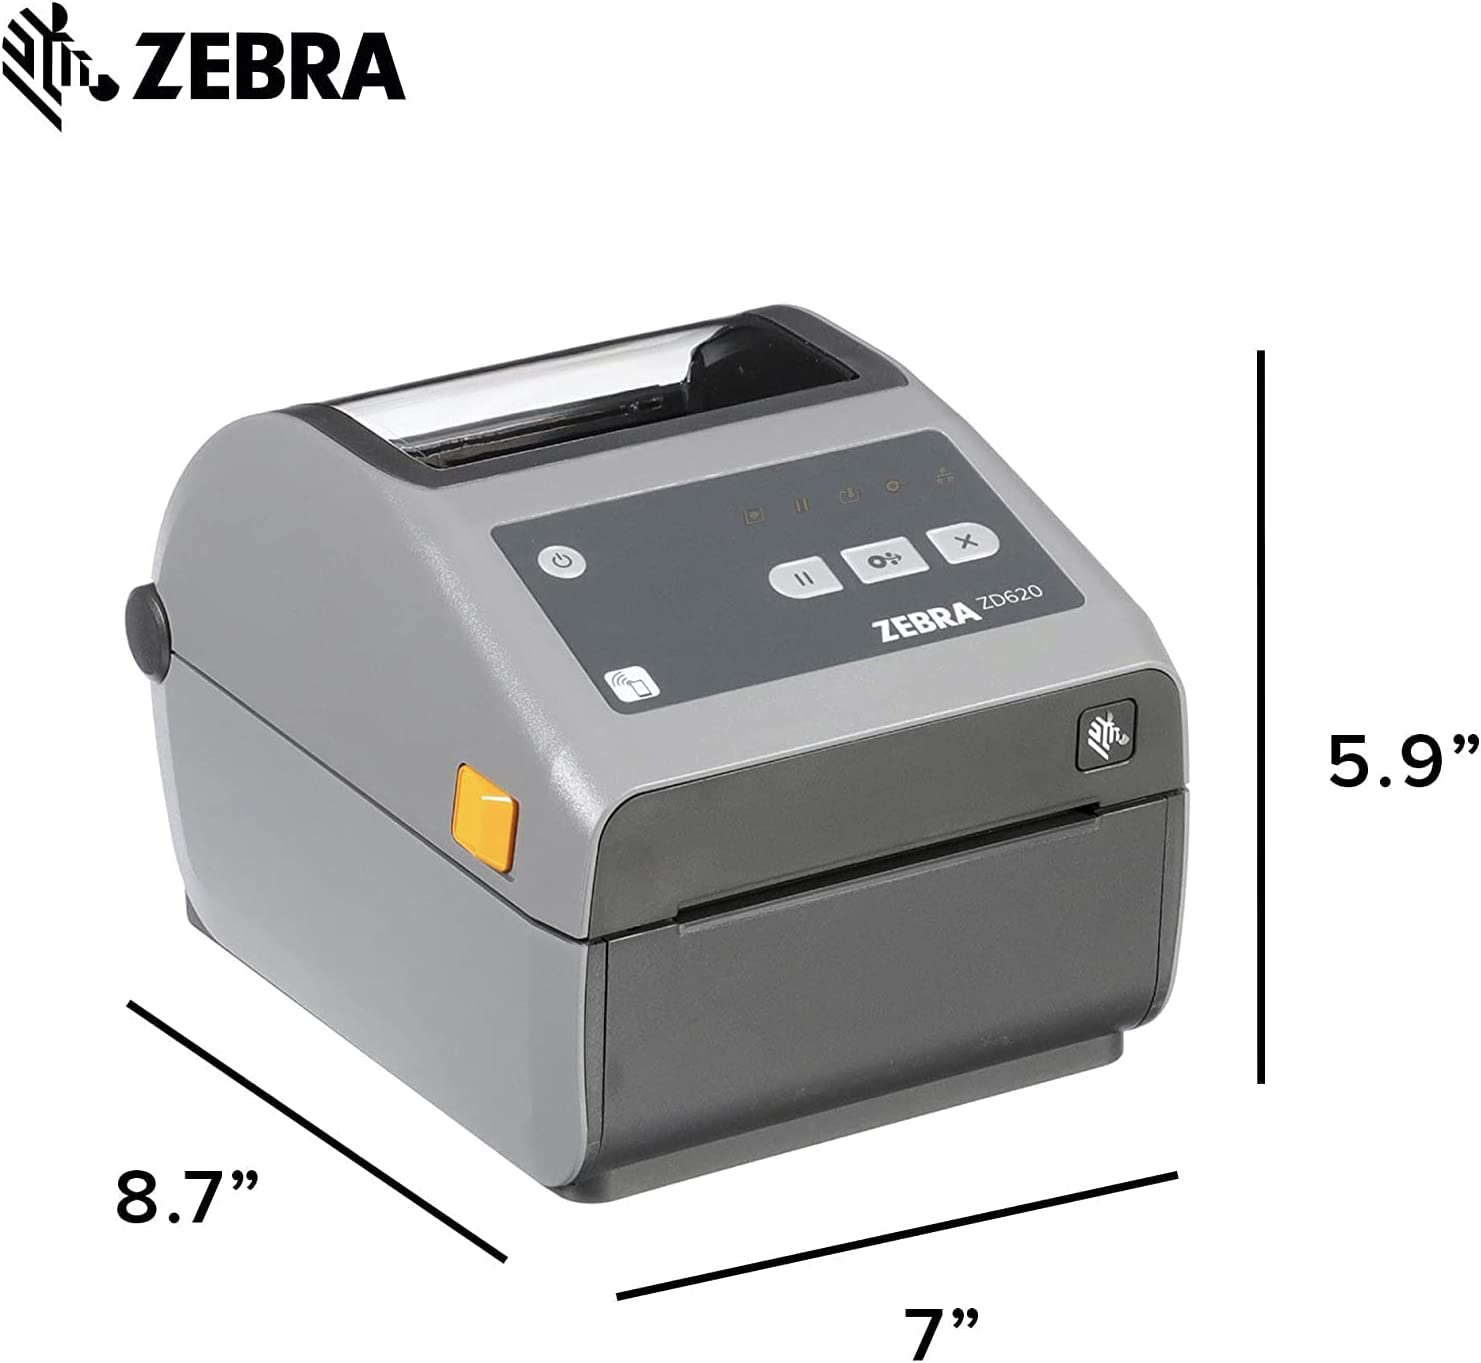 Zebra ZD620 Direct Thermal Desktop Printer Serial, USB, Ethernet,  Bluetooth Connectivity, 203 dpi, 4.09